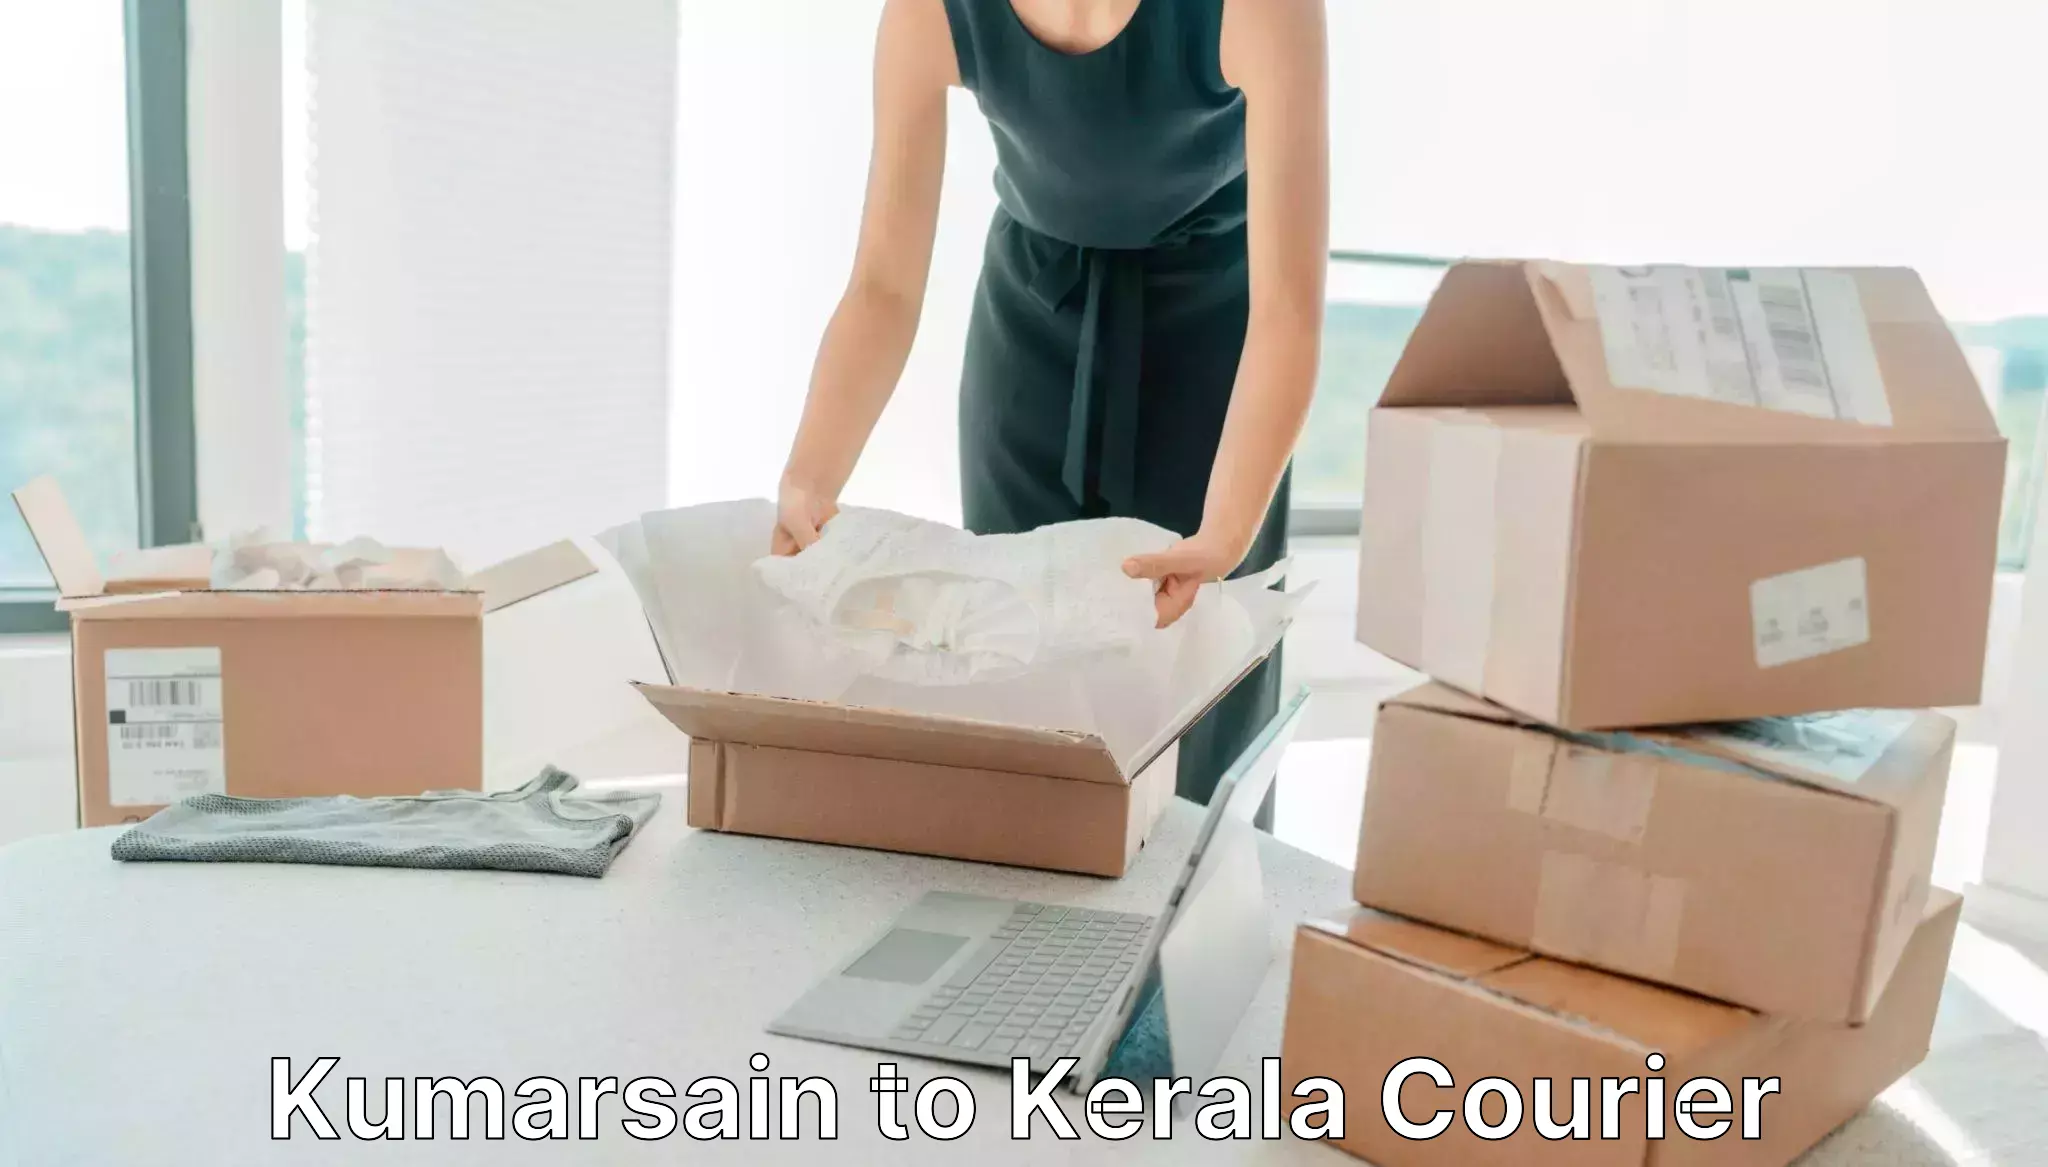 Parcel handling and care Kumarsain to Kerala